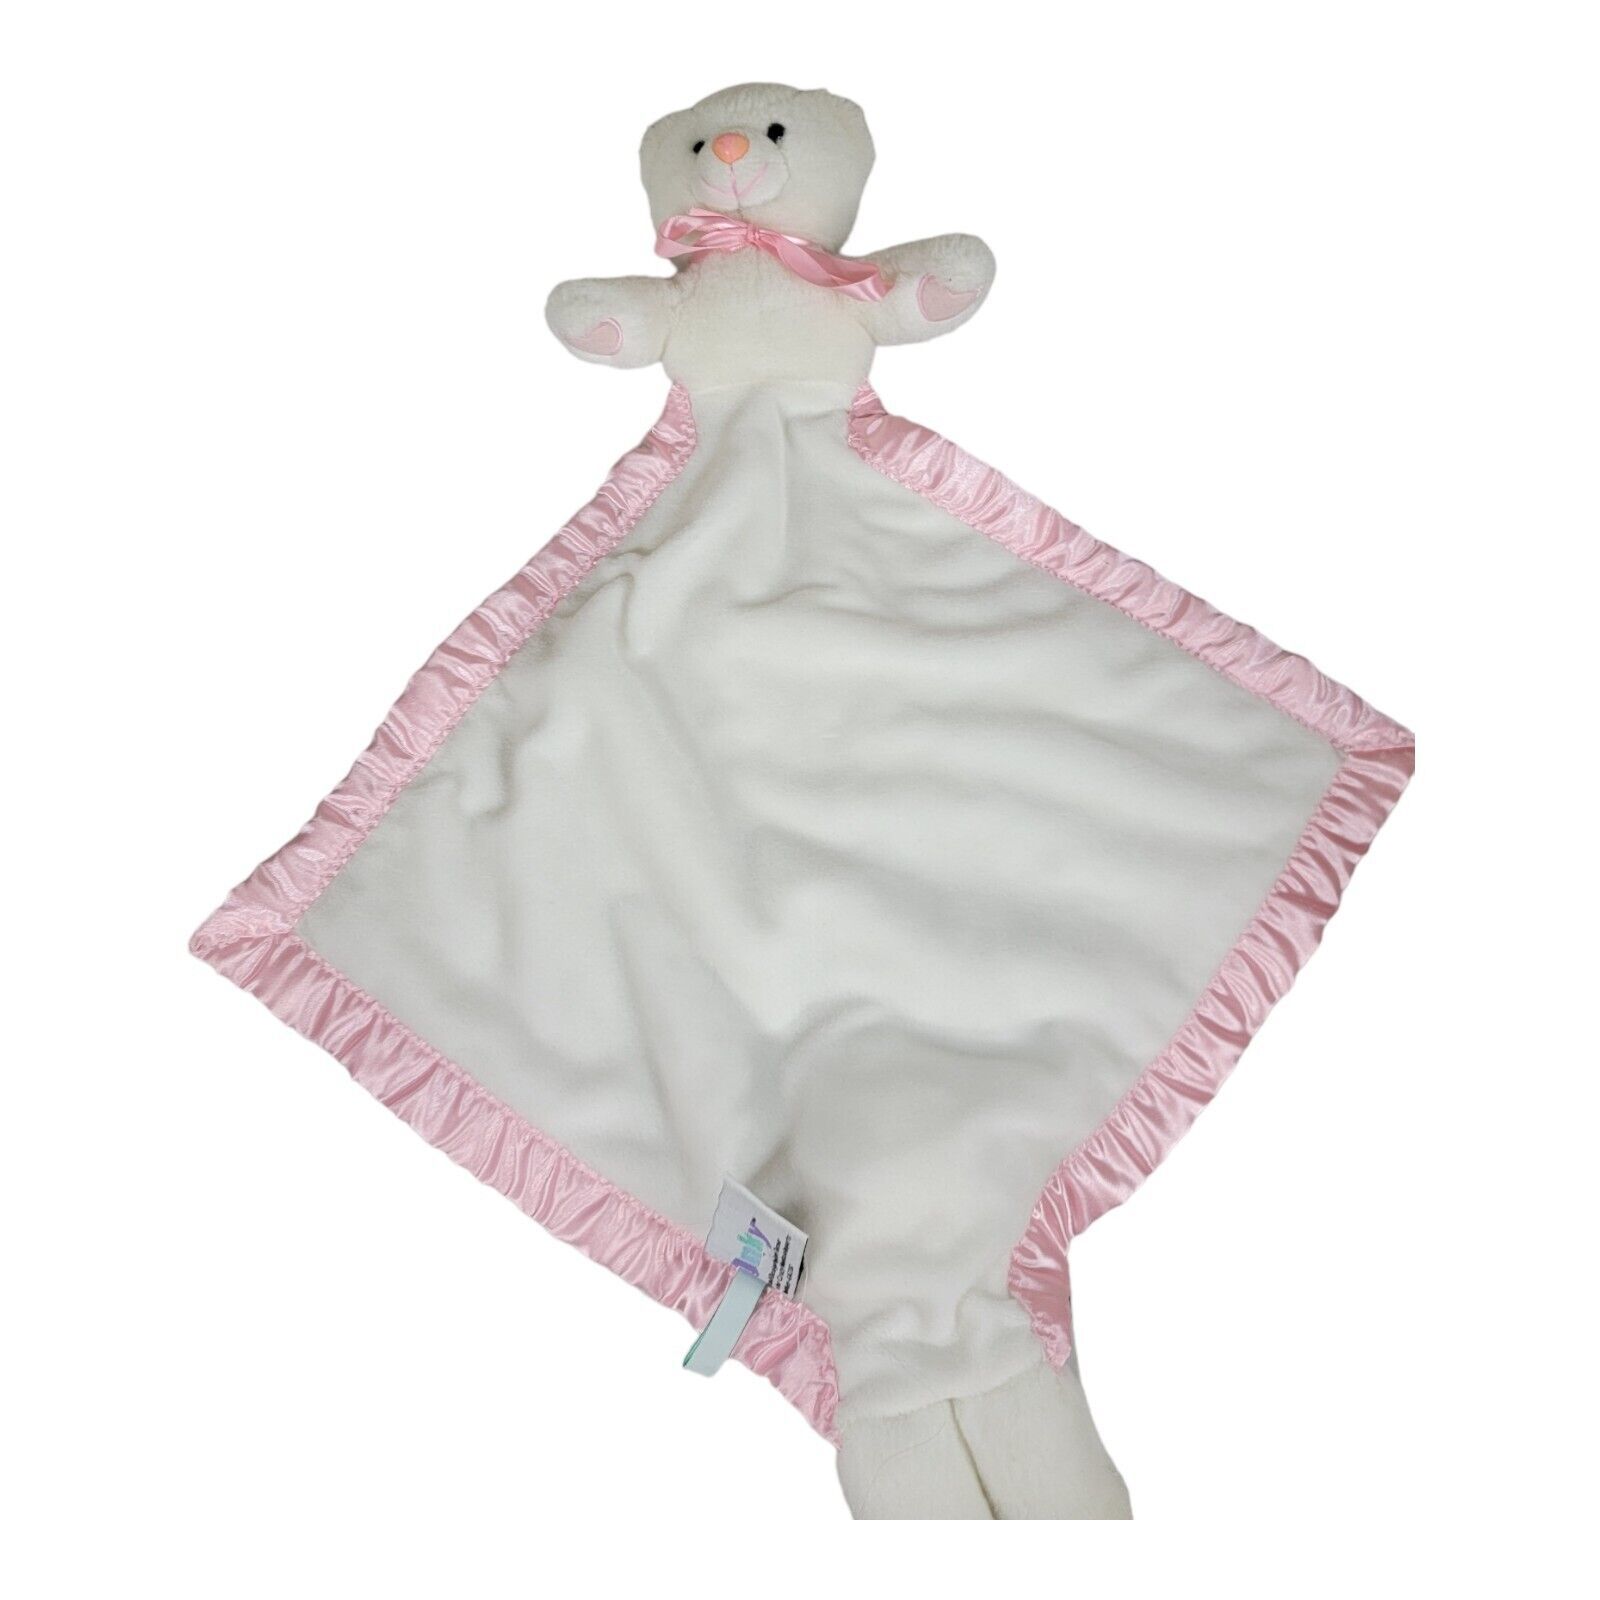 My Banky Blankie Lovie Lovey Plush Teddy Bear Satin Trim Baby Blanket Toy Pink - $23.27